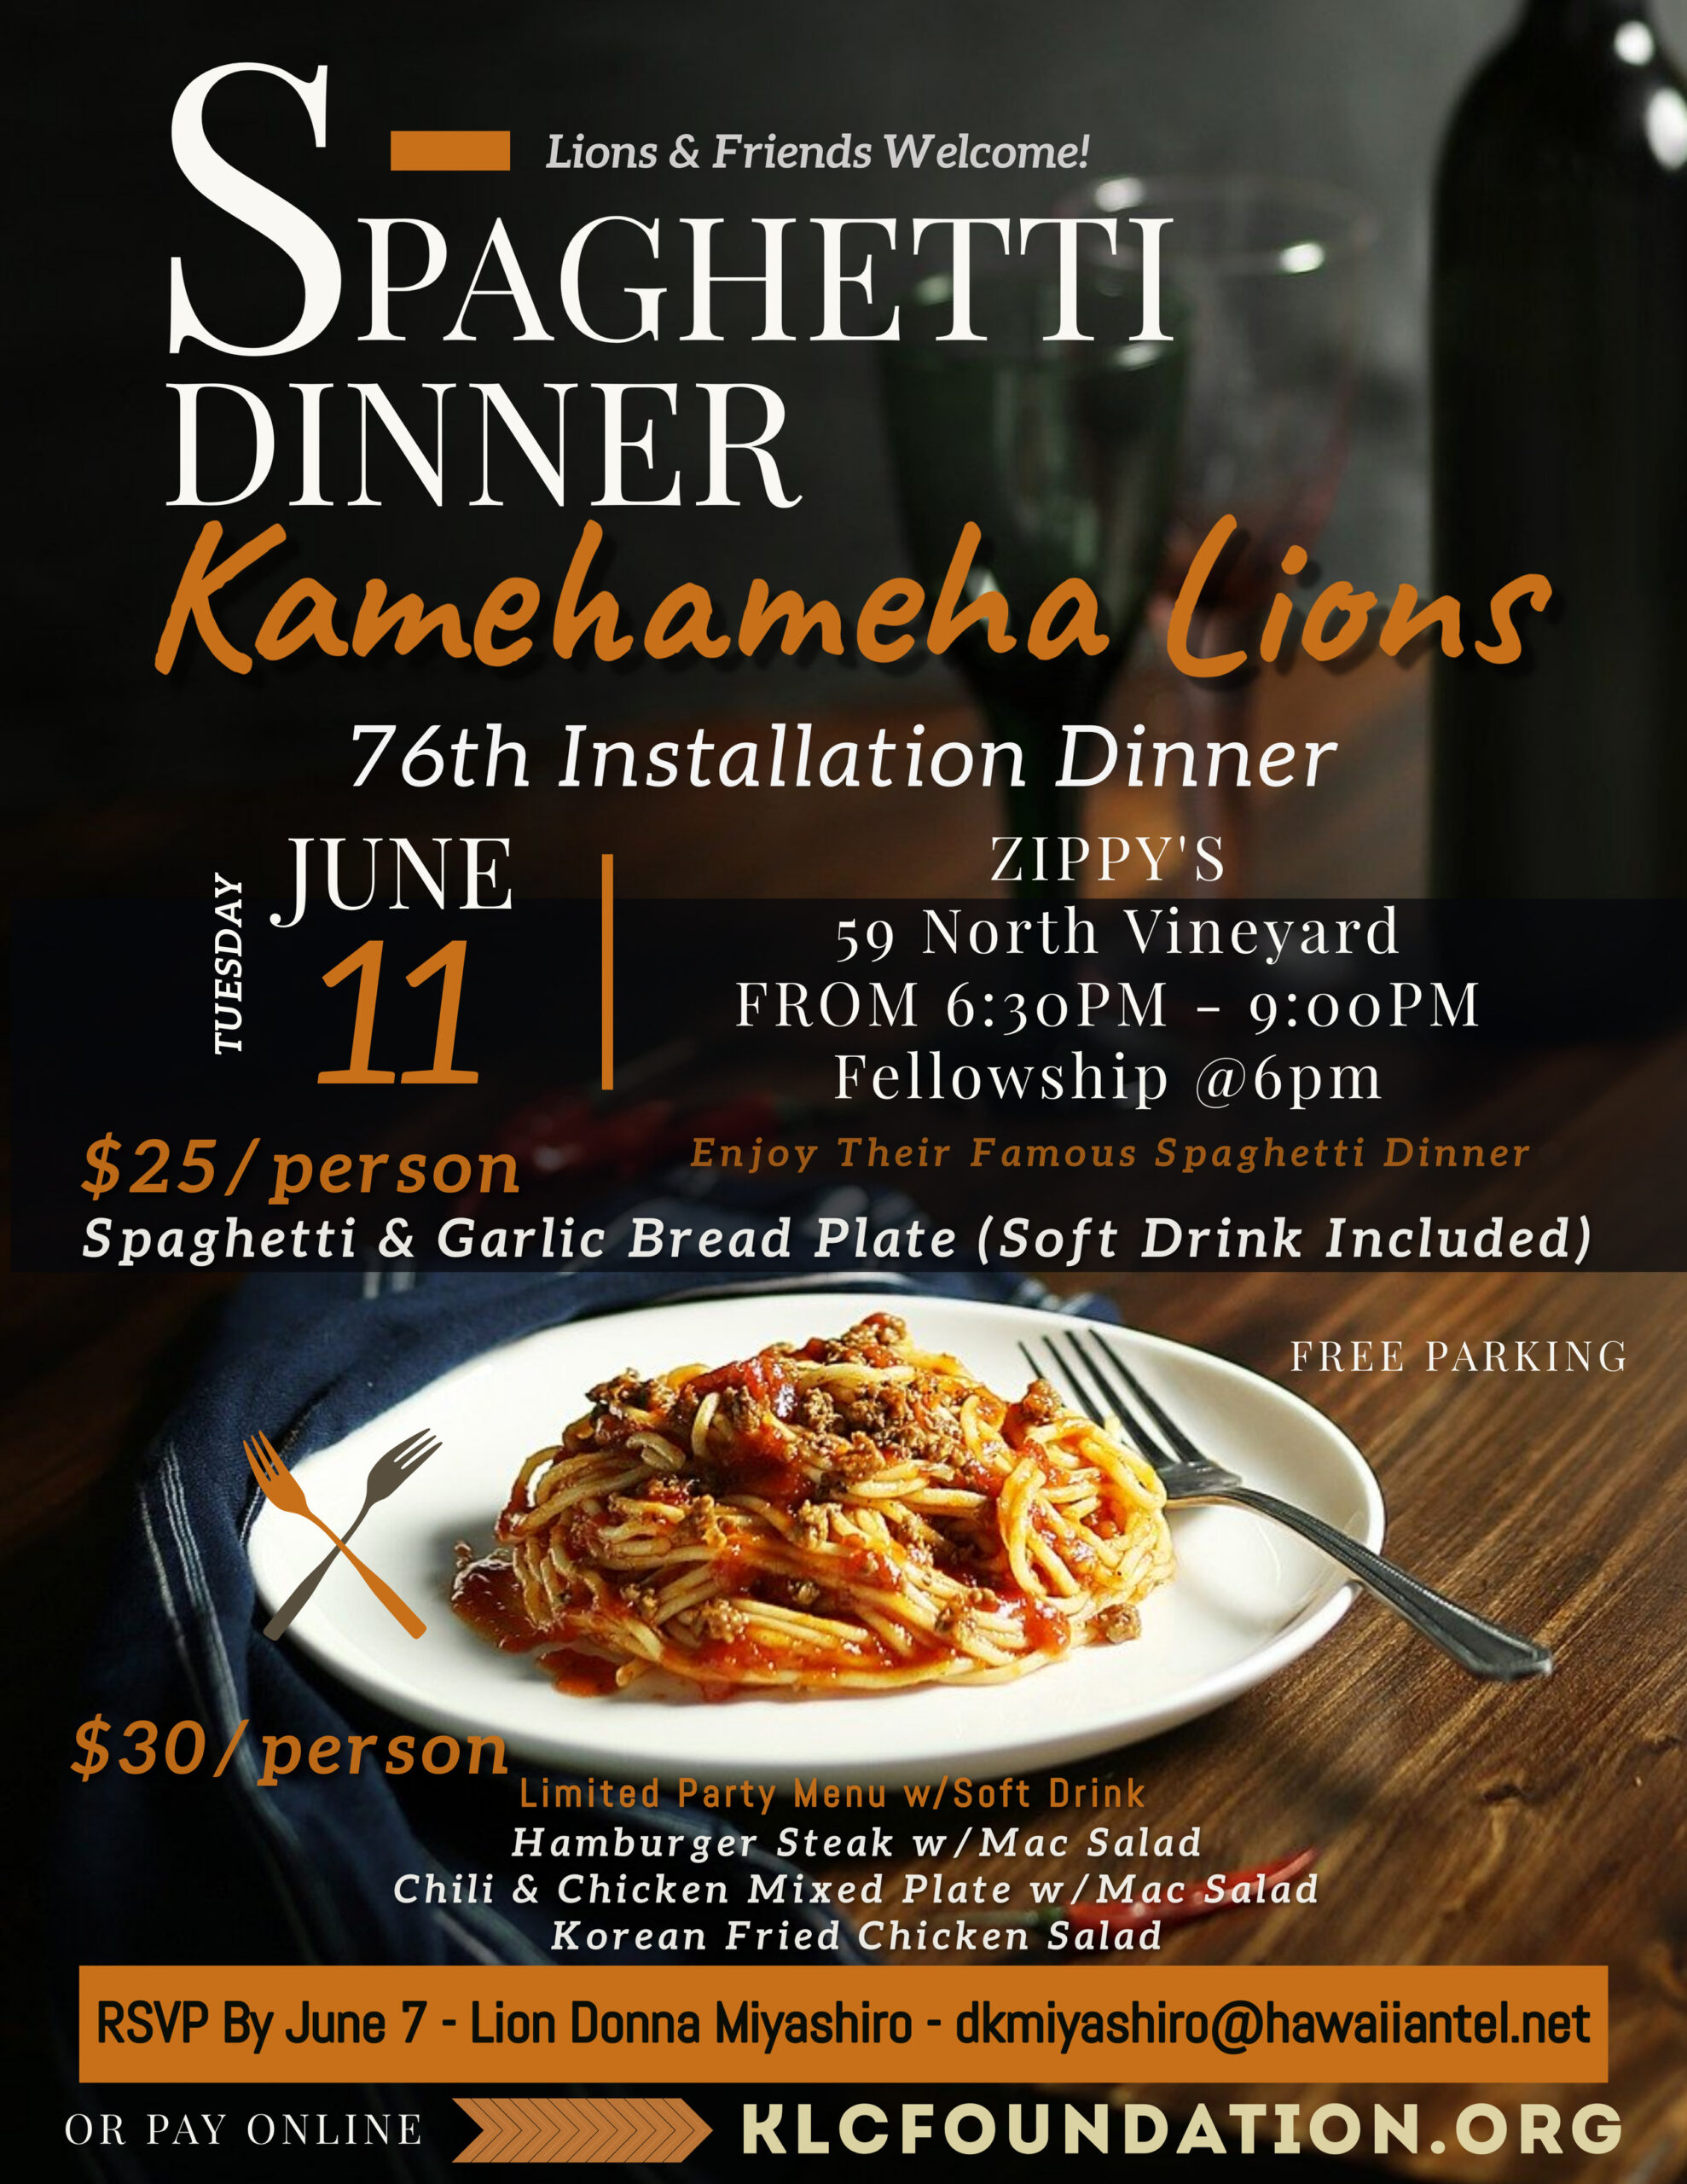 Kamehameha Lions Club 76th Installation